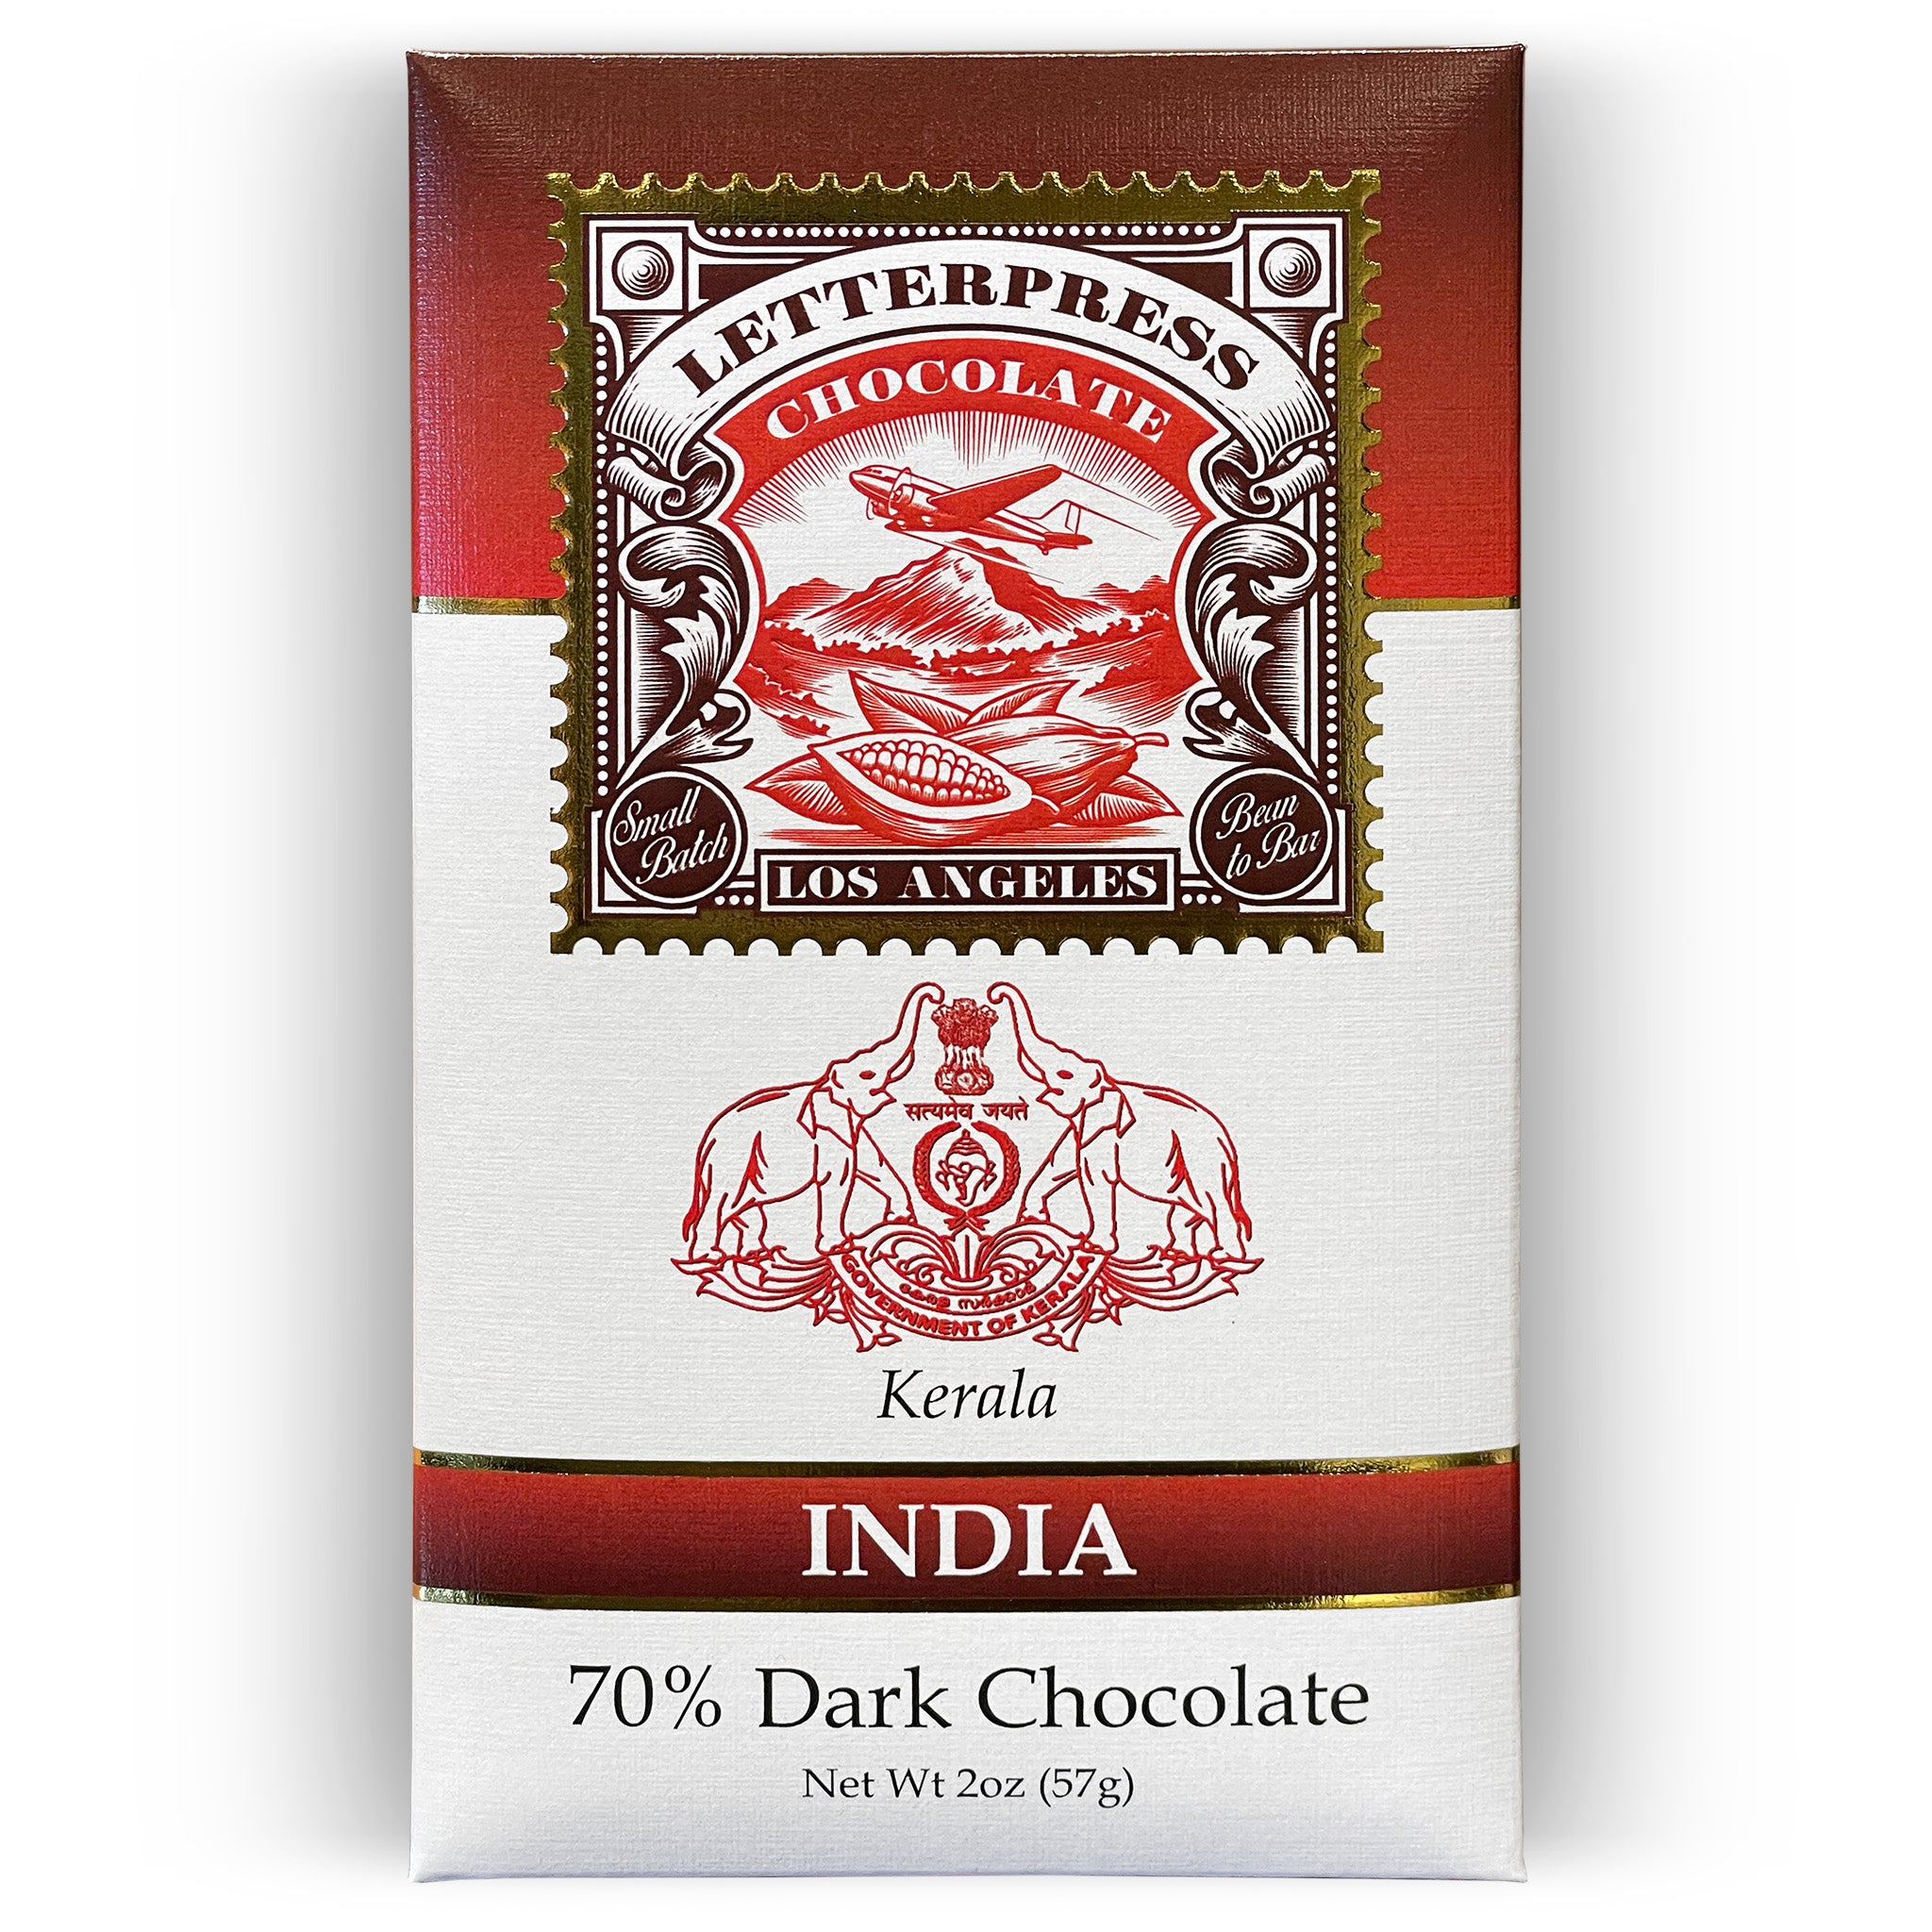 India 70% Dark Chocolate bar packaging on white background